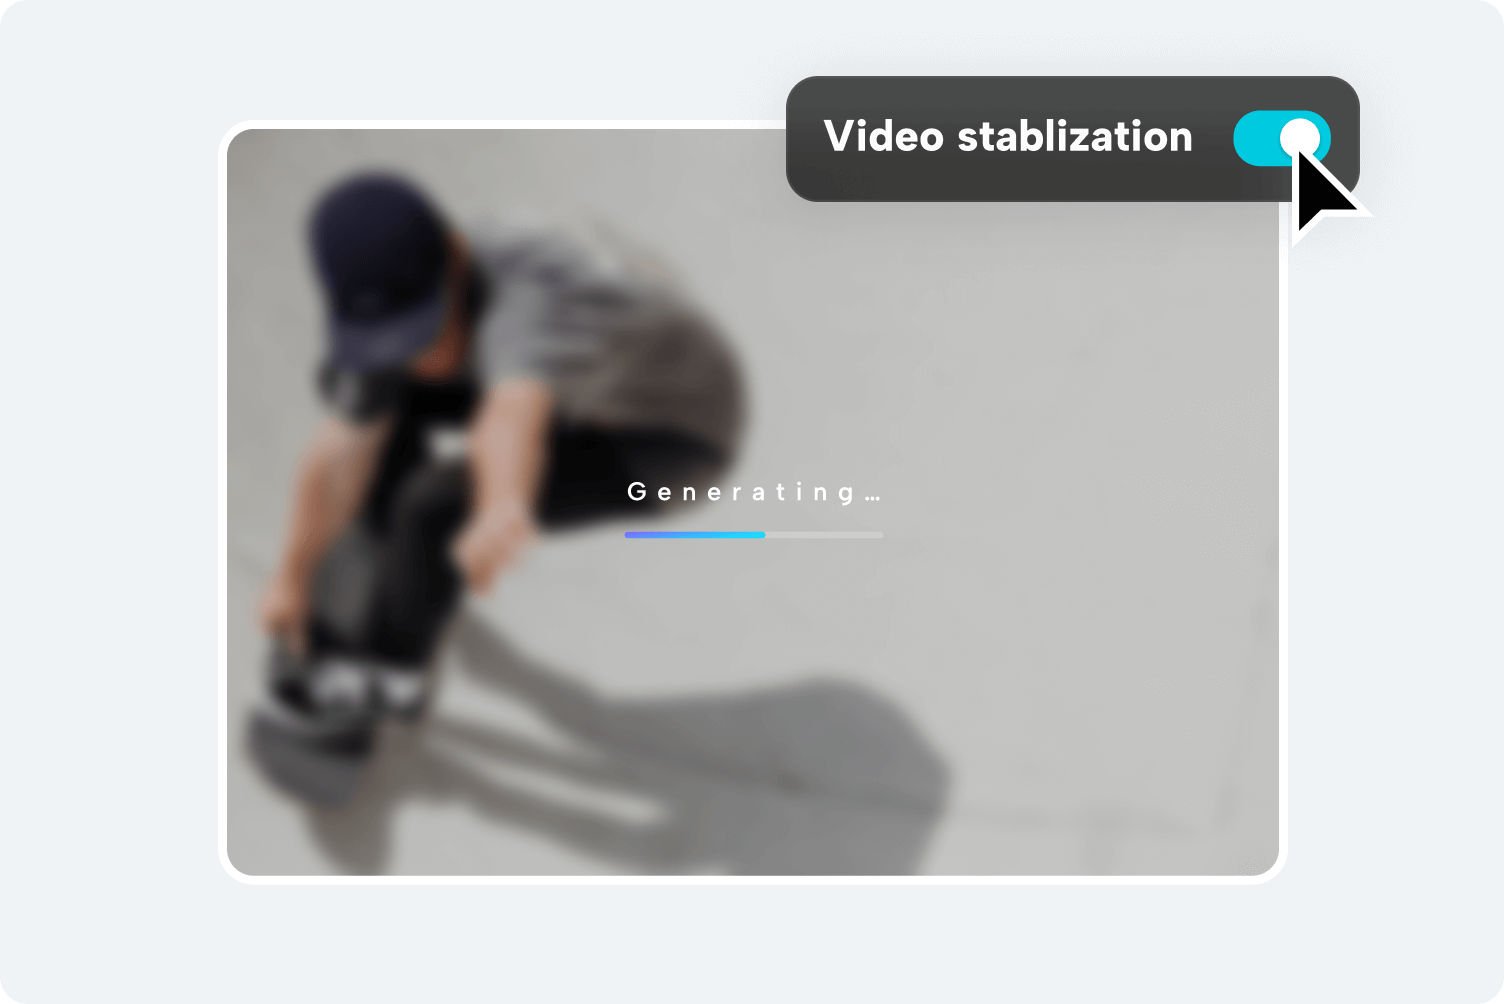 Stablize video trực tuyến